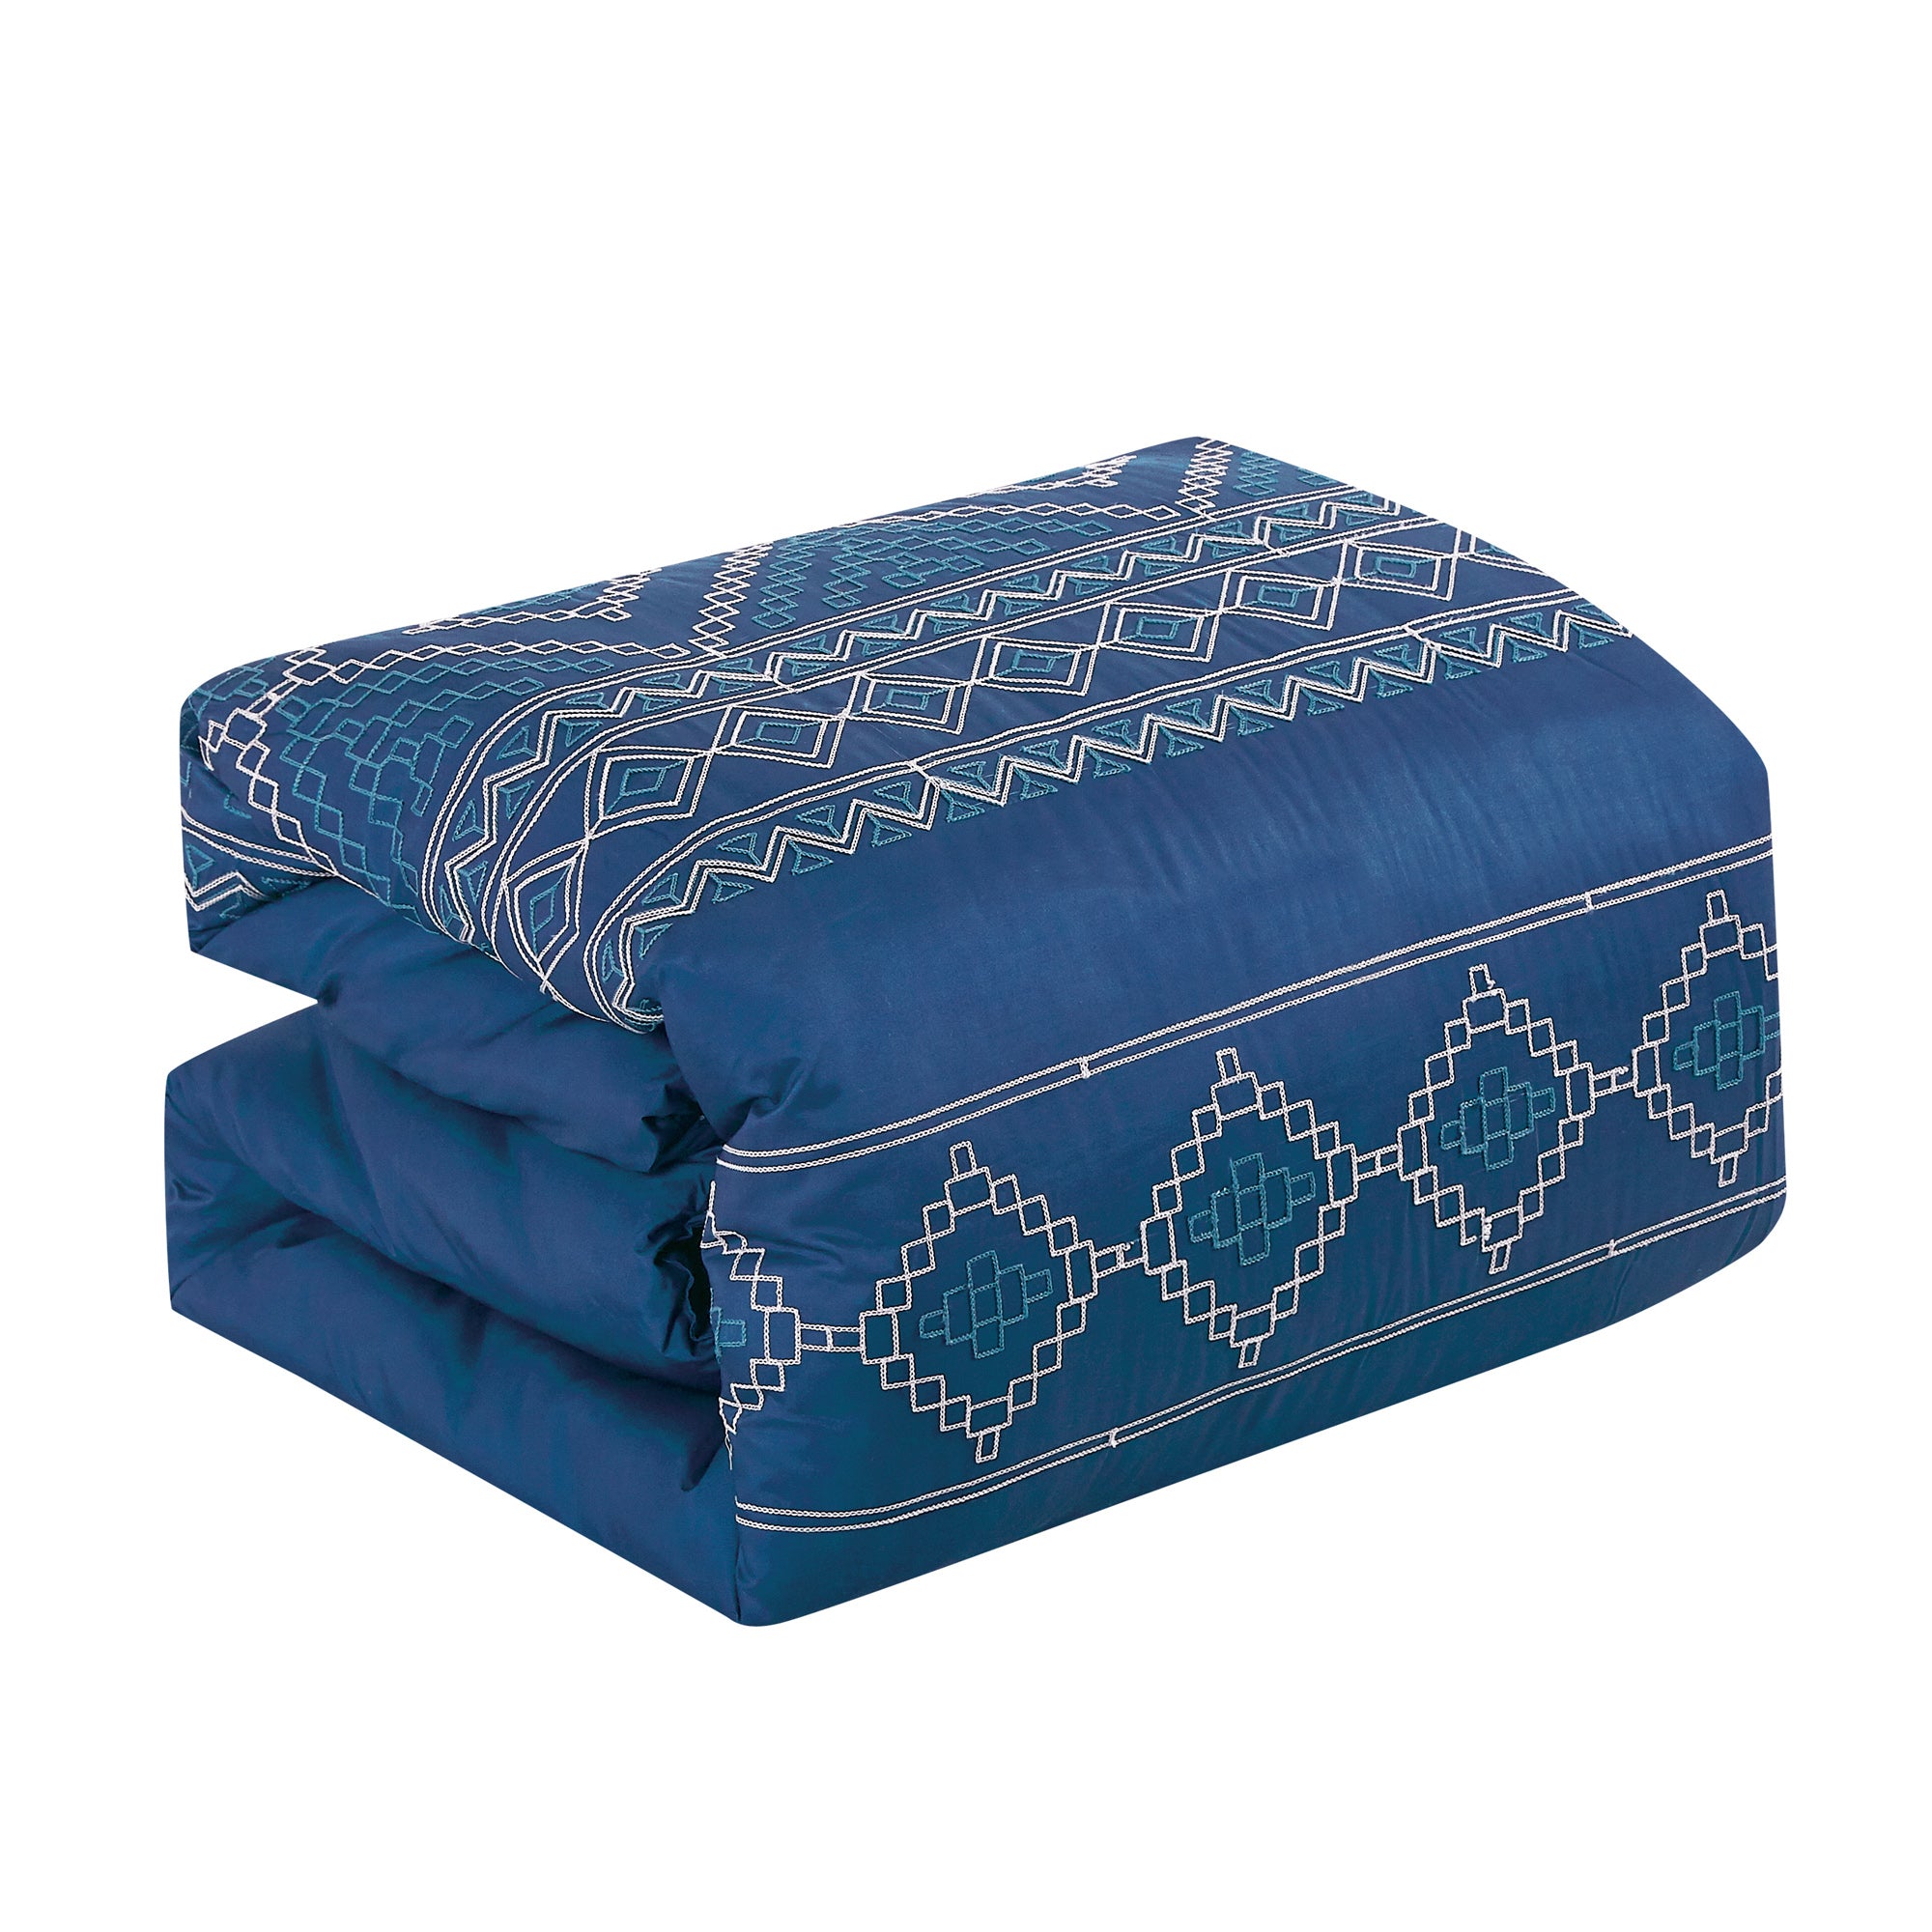 7 PCS Bedding Comforter Set